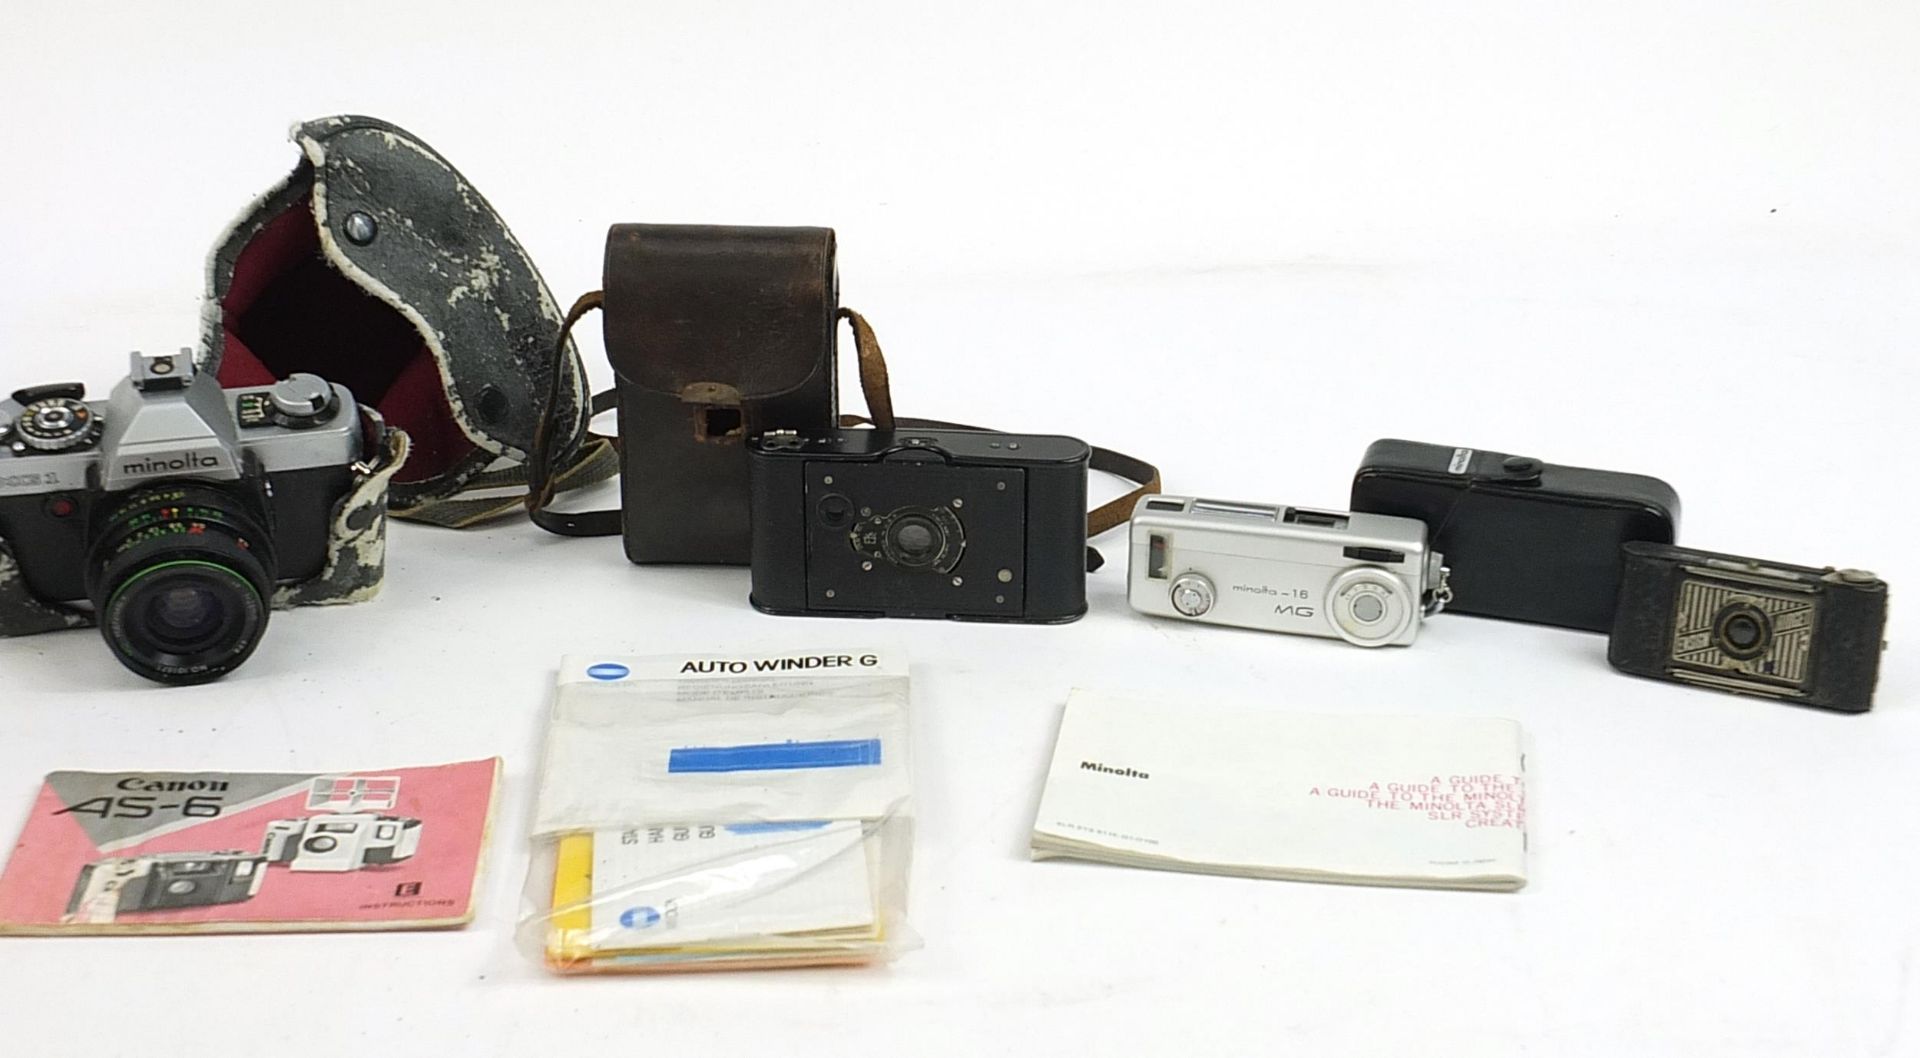 Vintage cameras including Canon AS-6, Minolta XG1 and Minolta-165 camera - Bild 3 aus 3